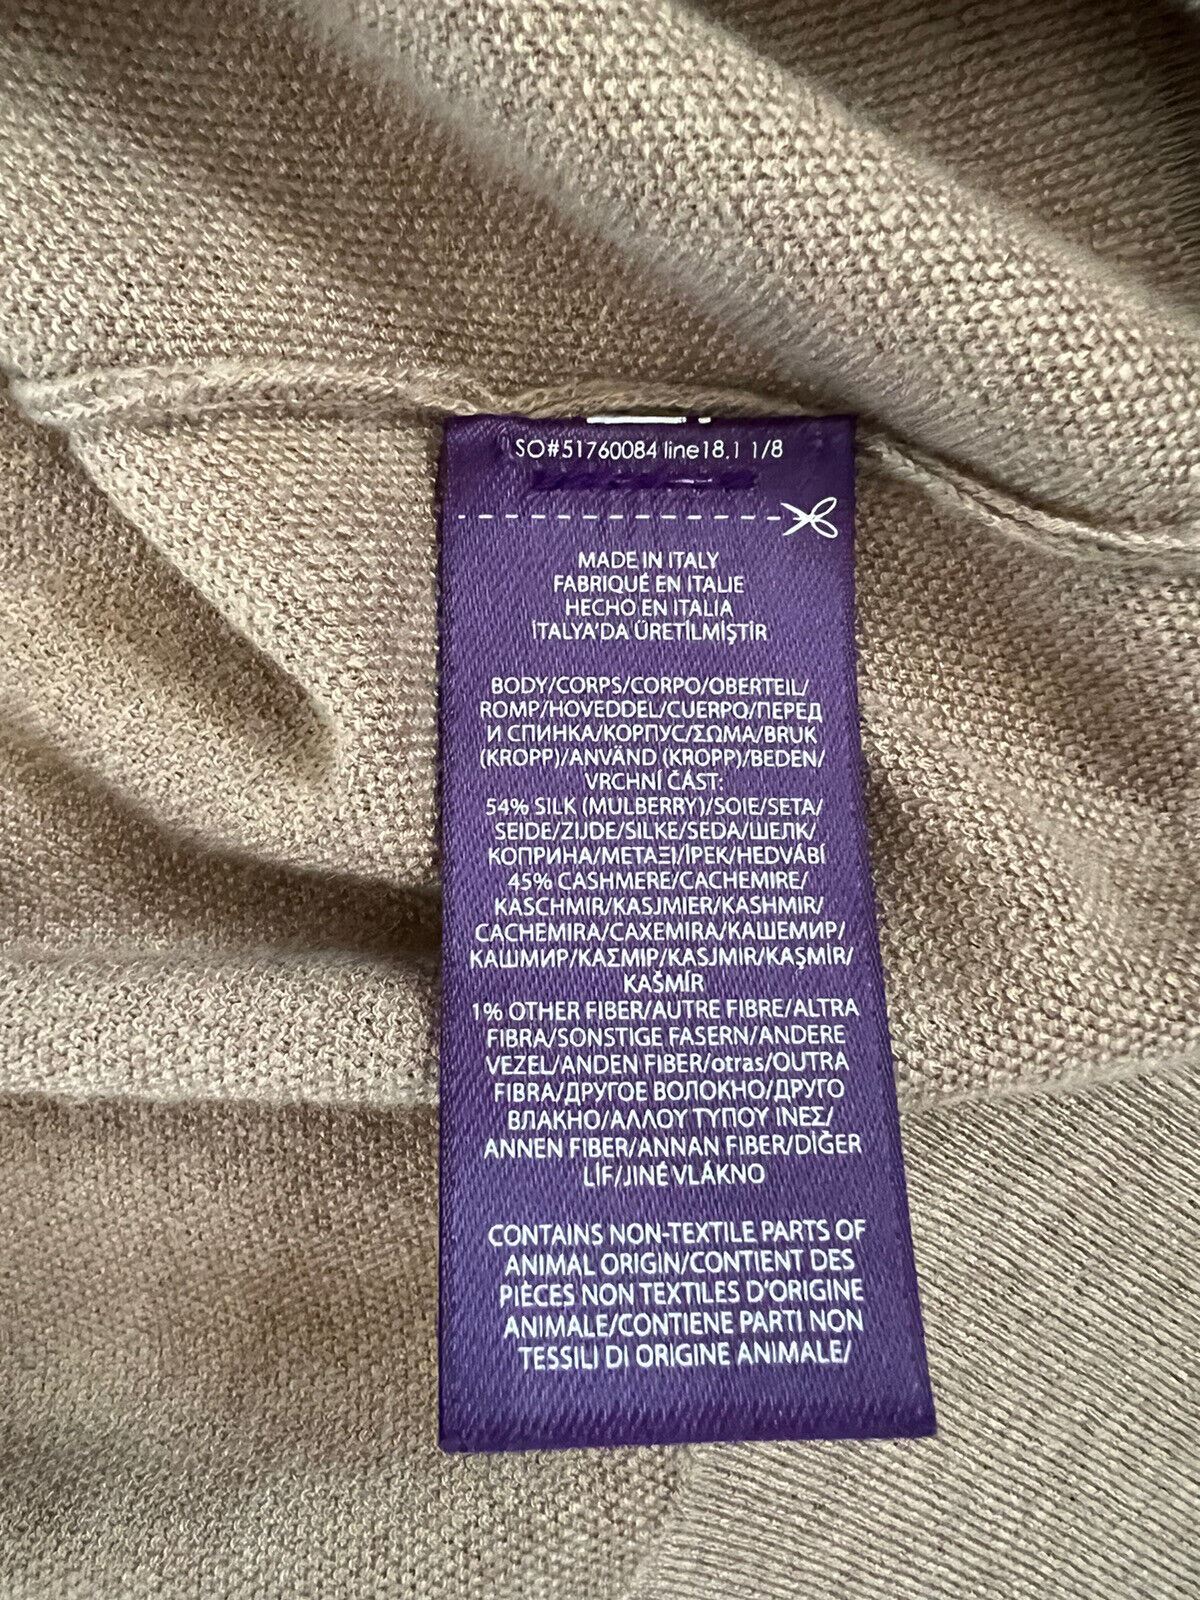 NWT $995 Ralph Lauren Purple Label Silk/Cashmere Oatmeal Polo Shirt L Italy